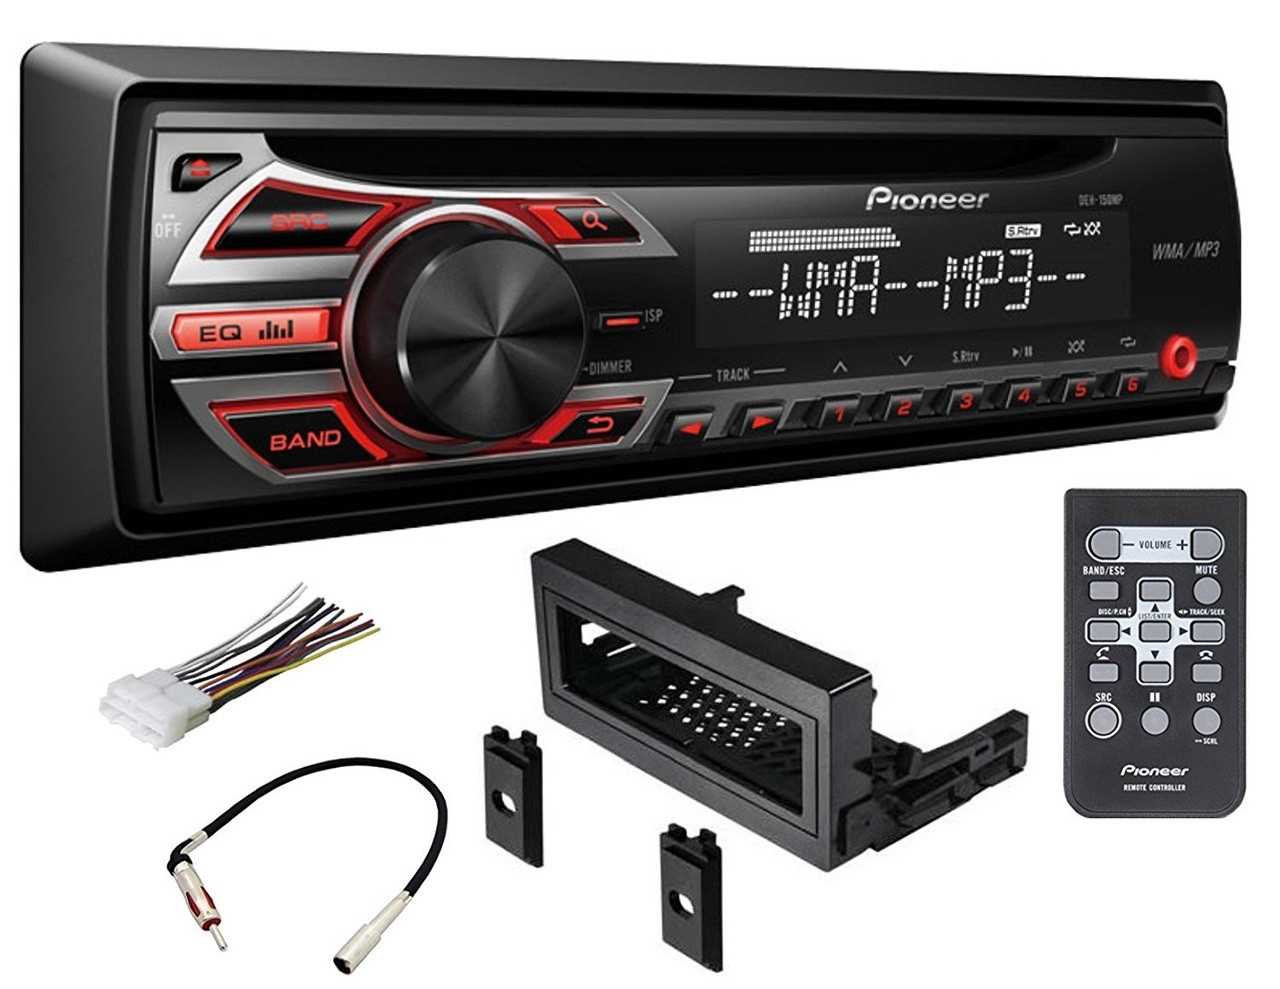 Pioneer Car Radio Stereo CD Player Dash Install Mounting Kit Harness Antenna -7